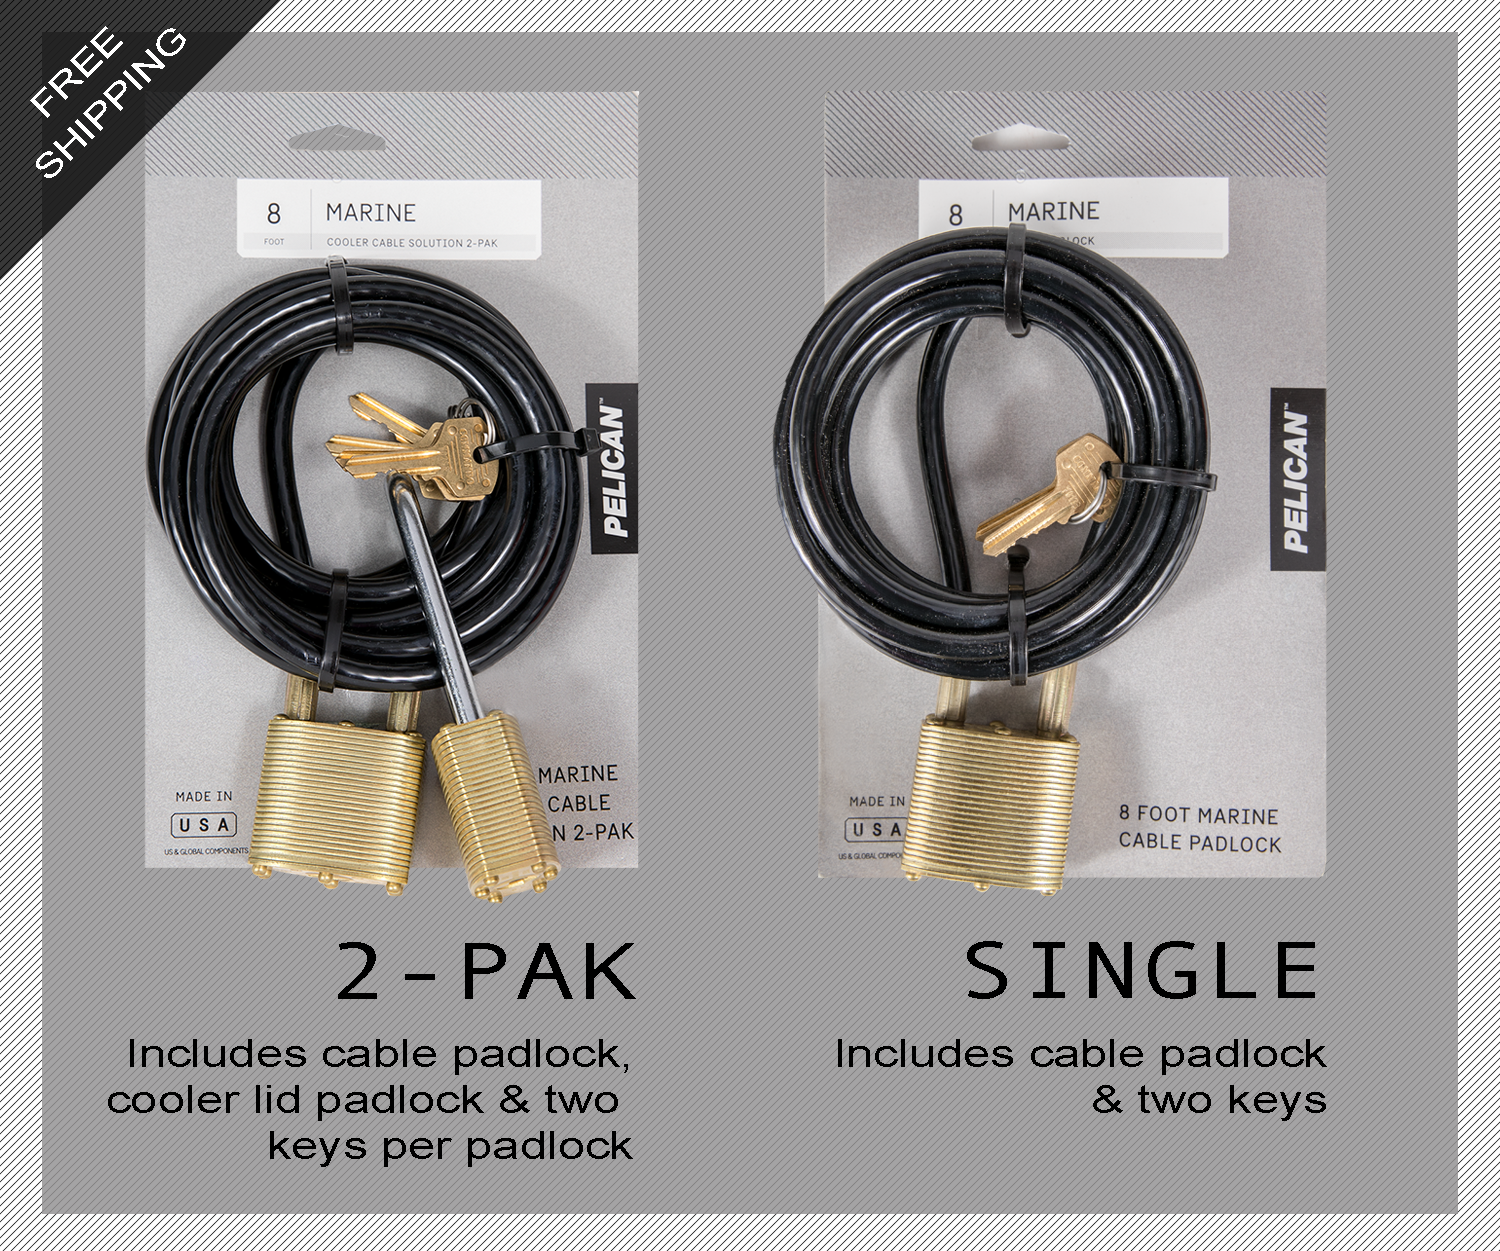 Introducing Pelican™ Marine Cable Lock